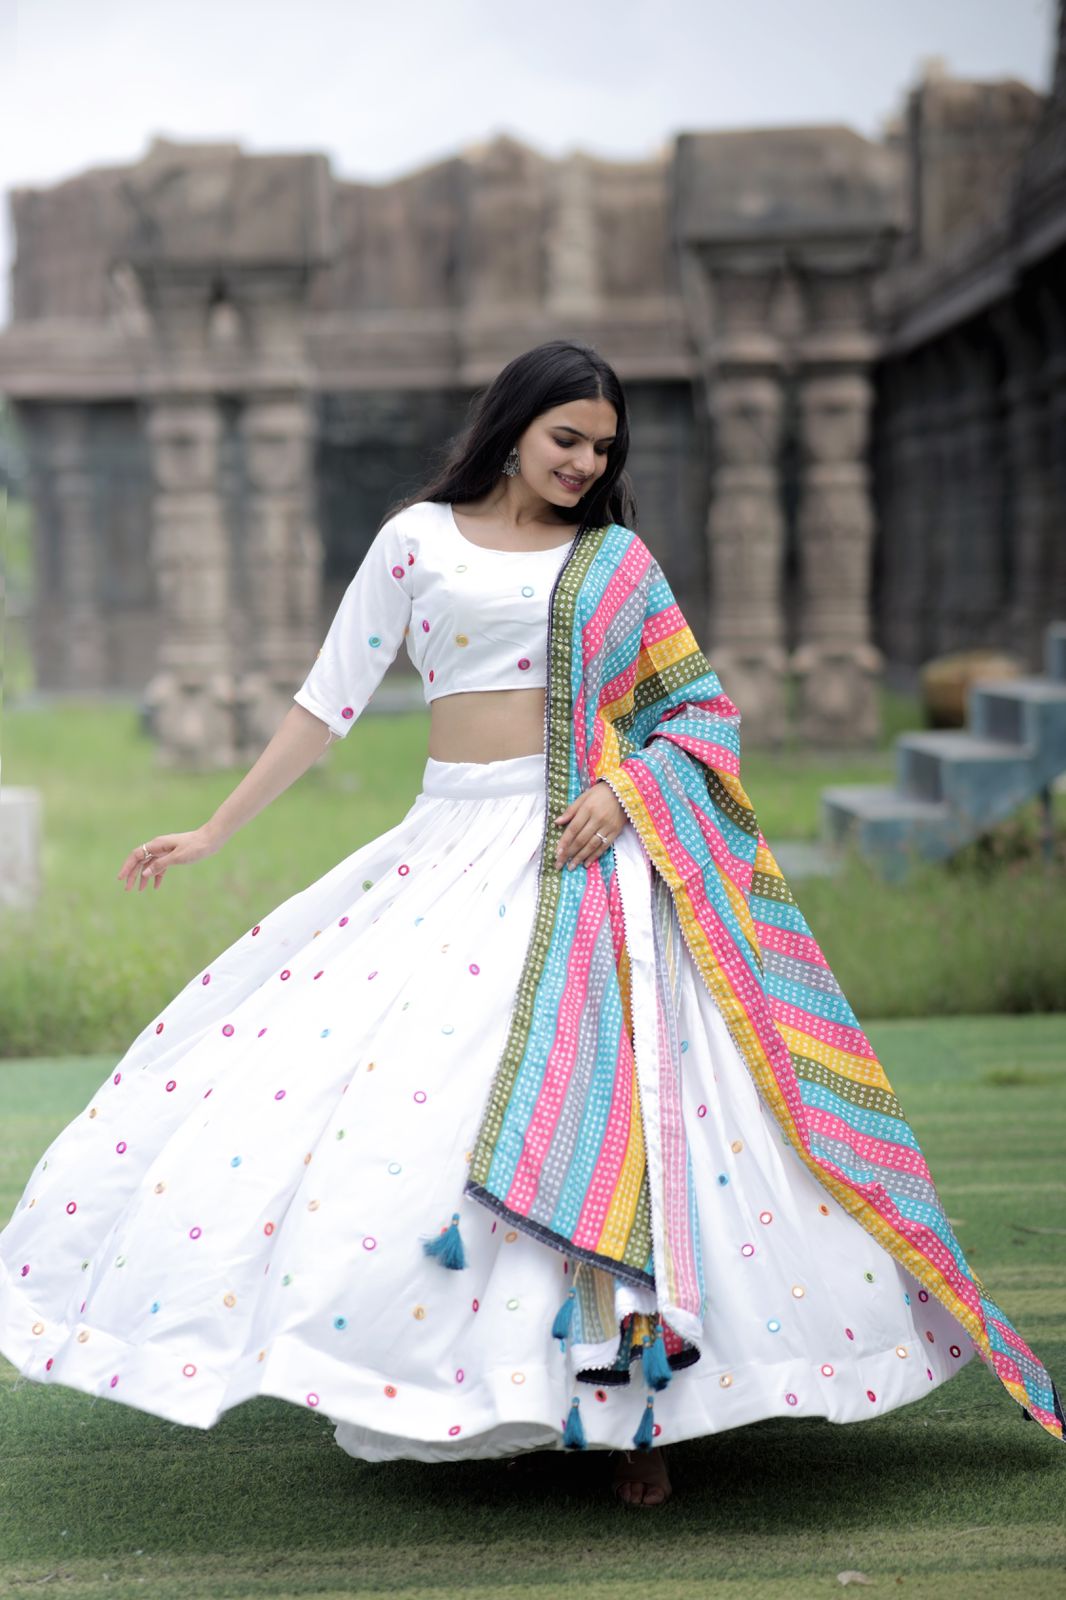 Indian Women Cotton Lehenga Choli Bagru Printed Top Skirt with Mulmul  Dupatta | eBay